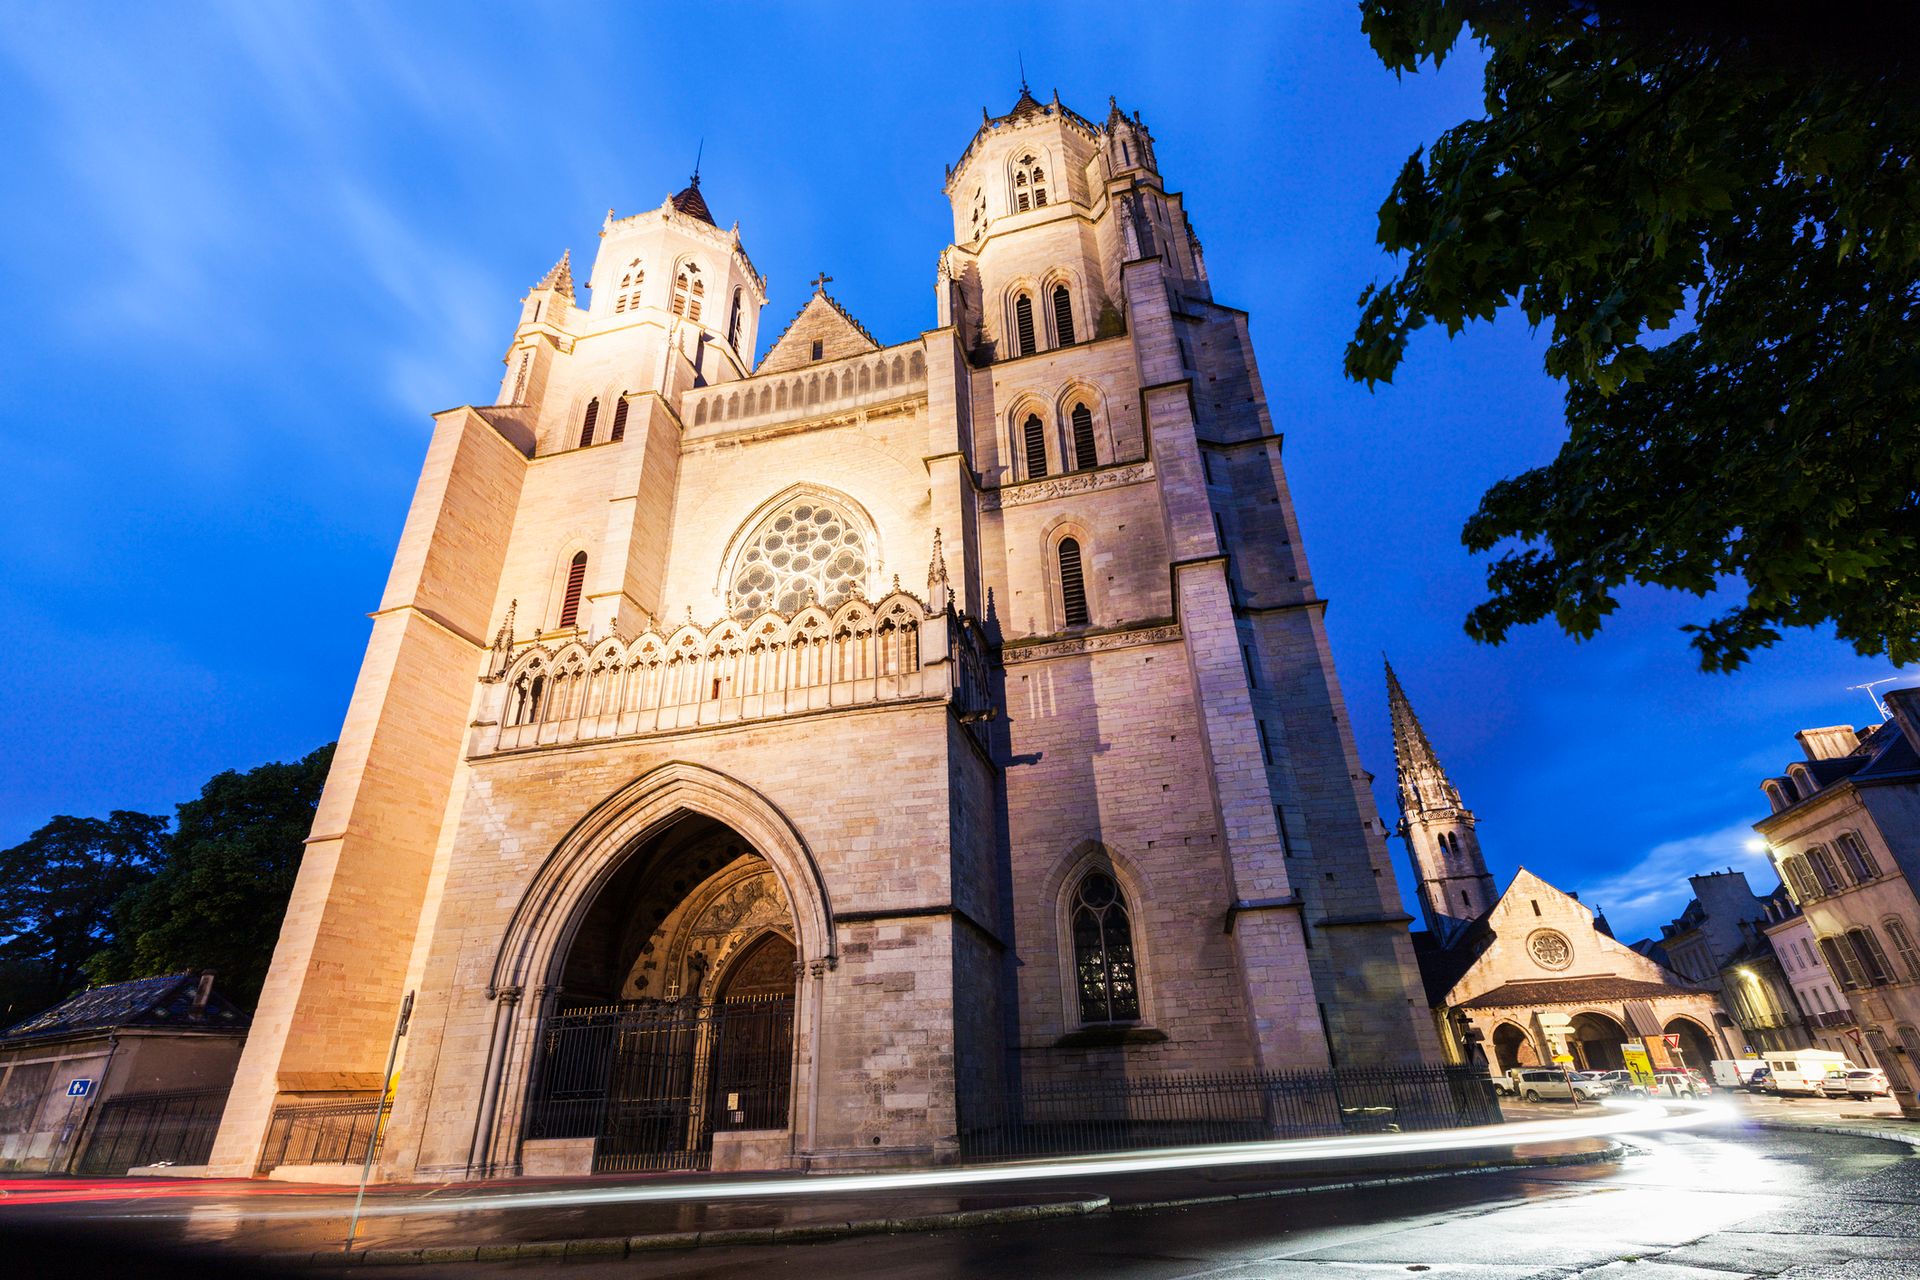 Cathédrale Saint Bénigne, Dijon, Bourgogne - France ©iStock